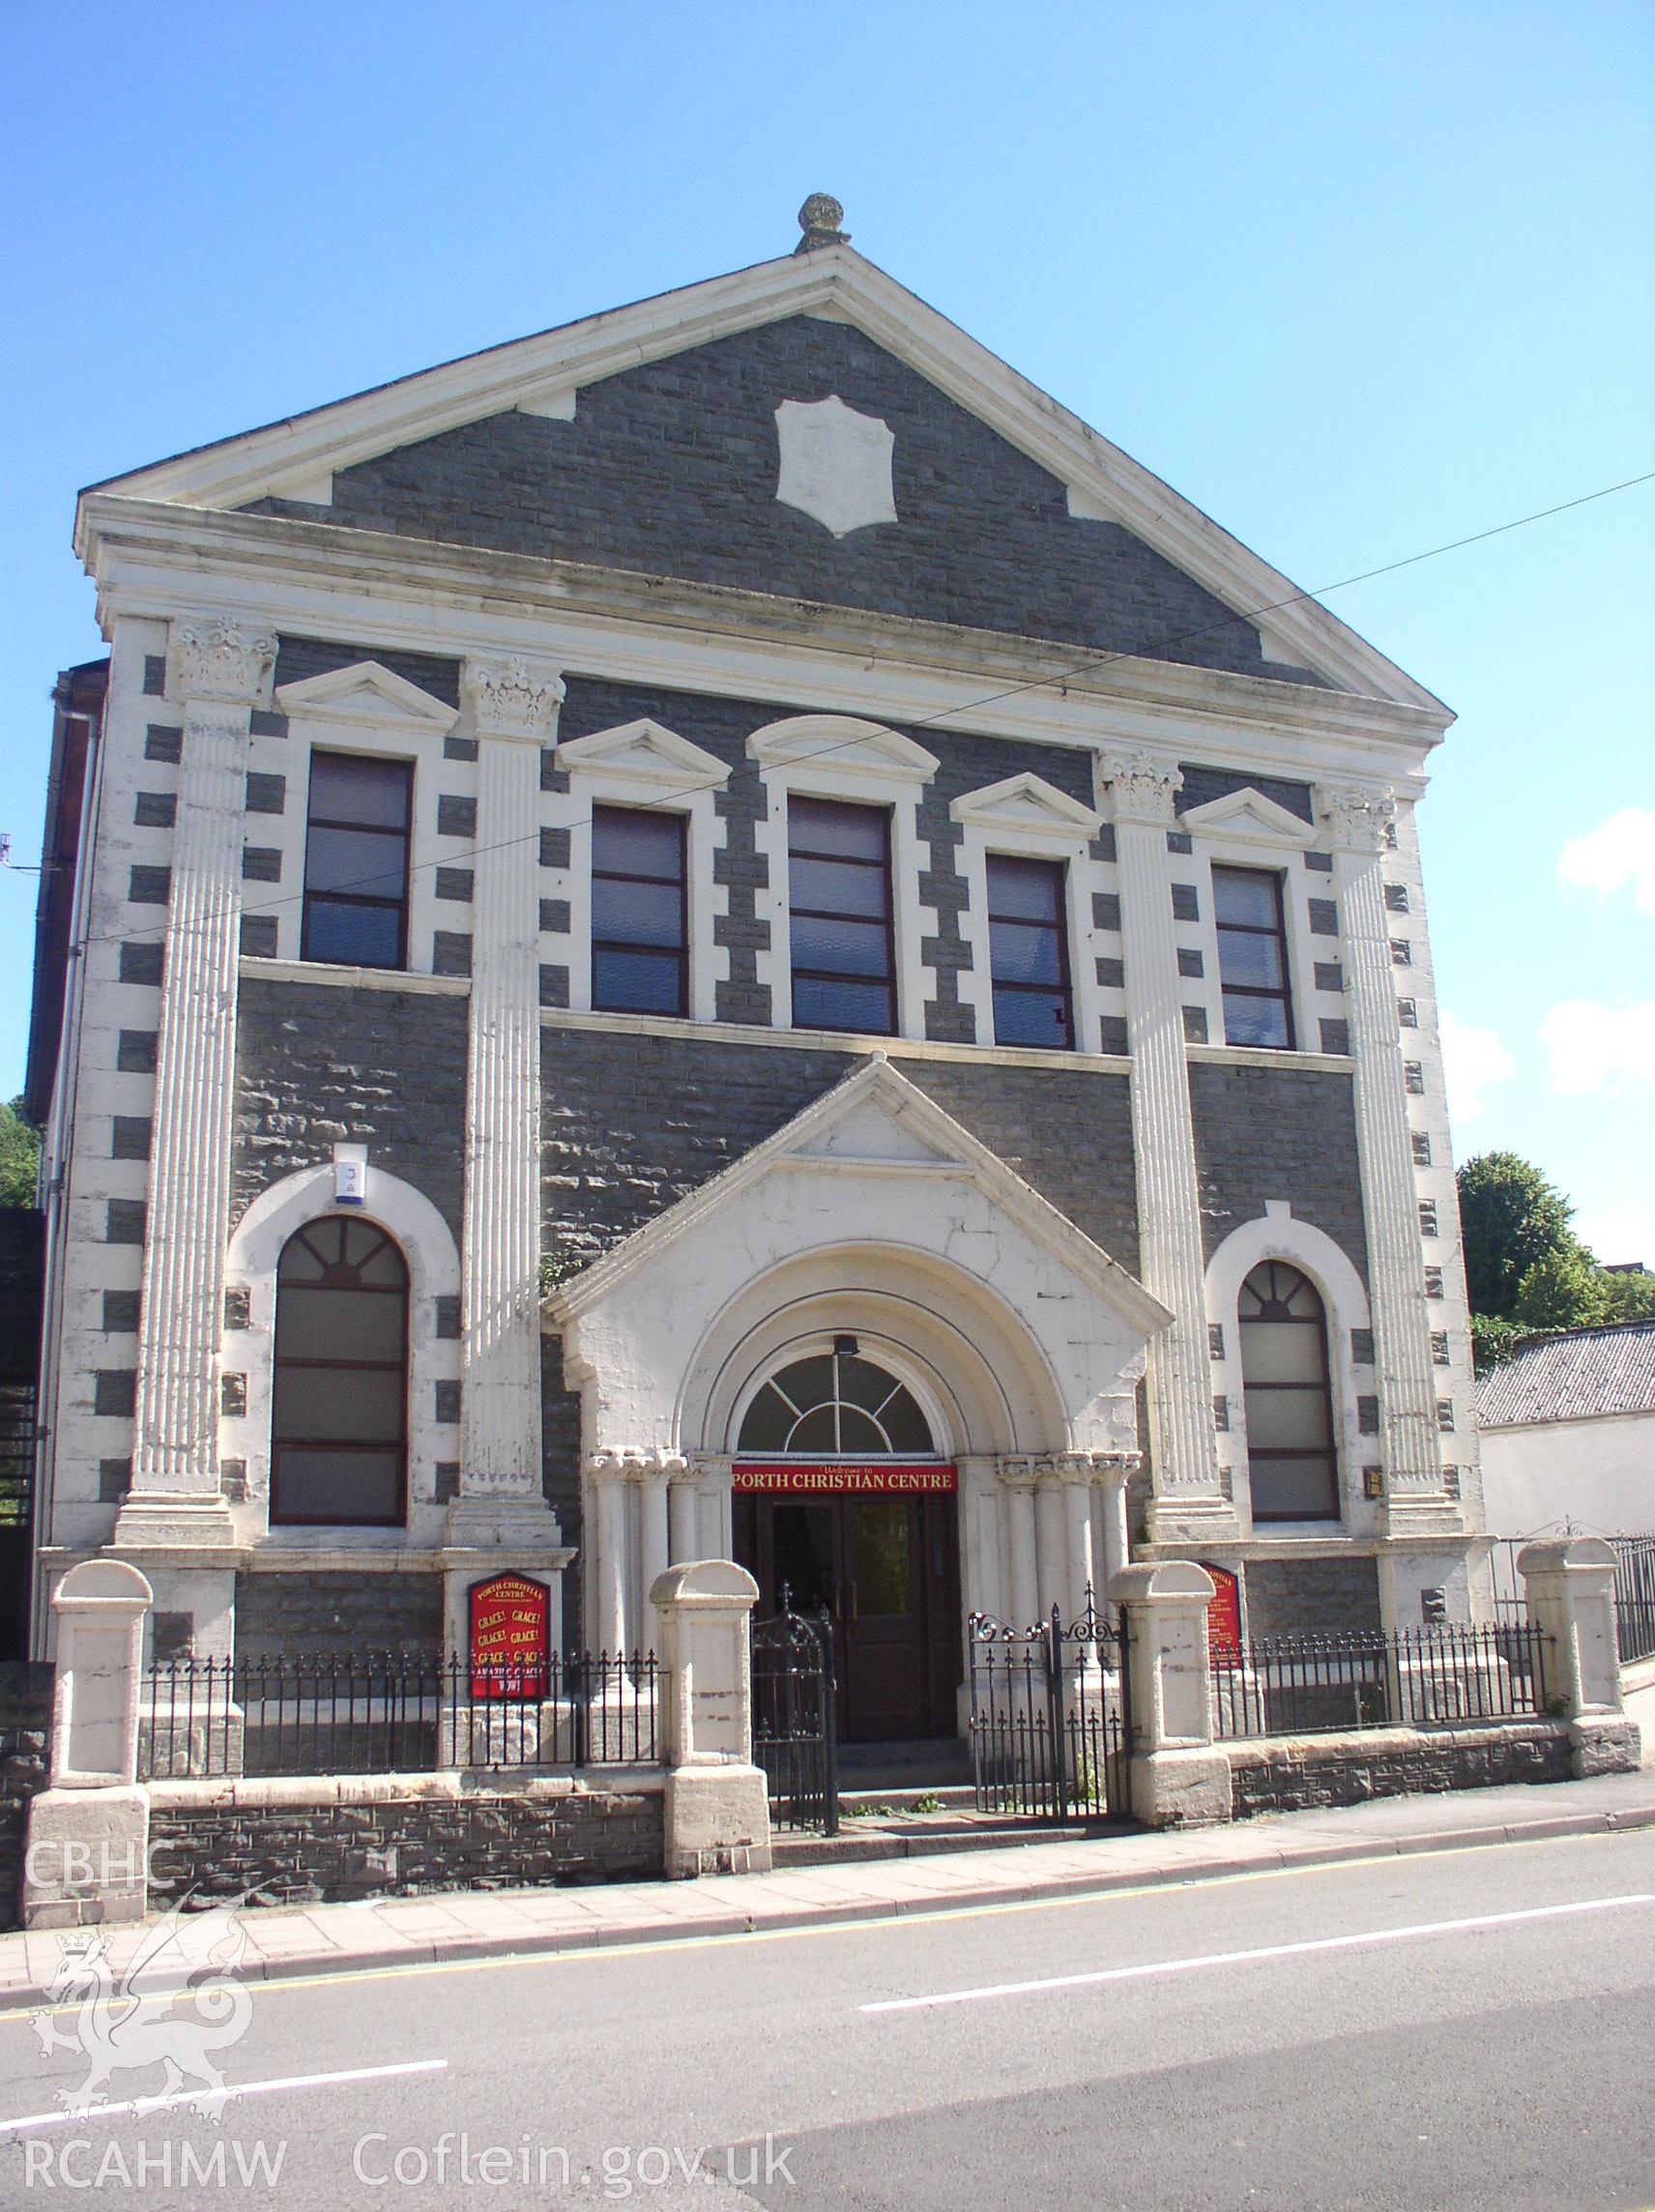 Colour digital photograph showing the exterior of Elim Pentecostal Church, Porth; Glamorgan.